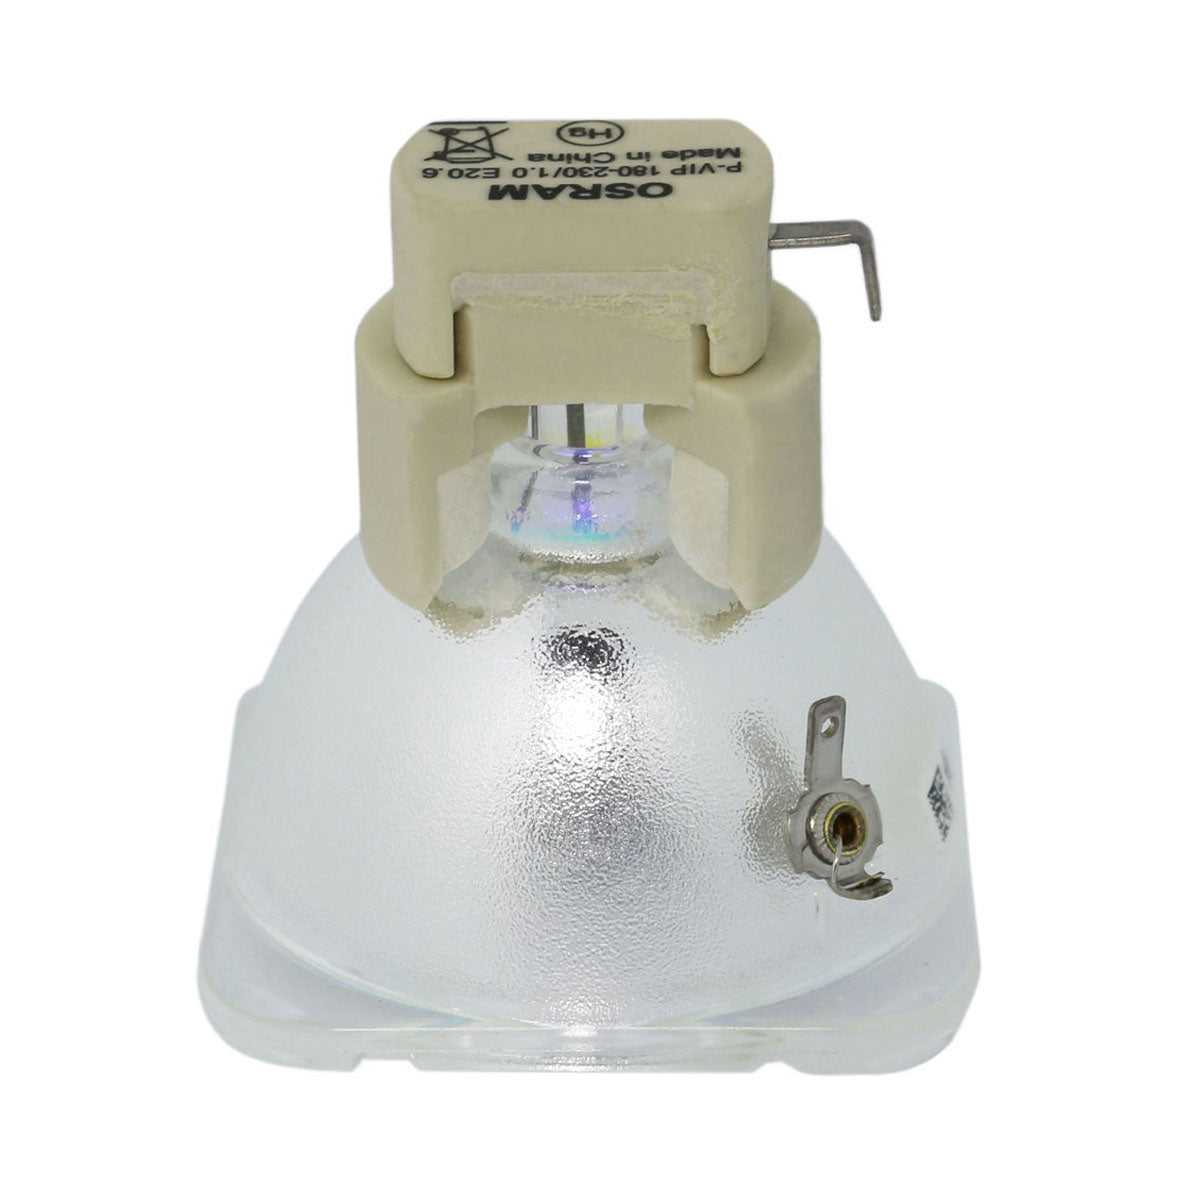 BenQ 5J.J2S05.001 Osram Projector Bare Lamp